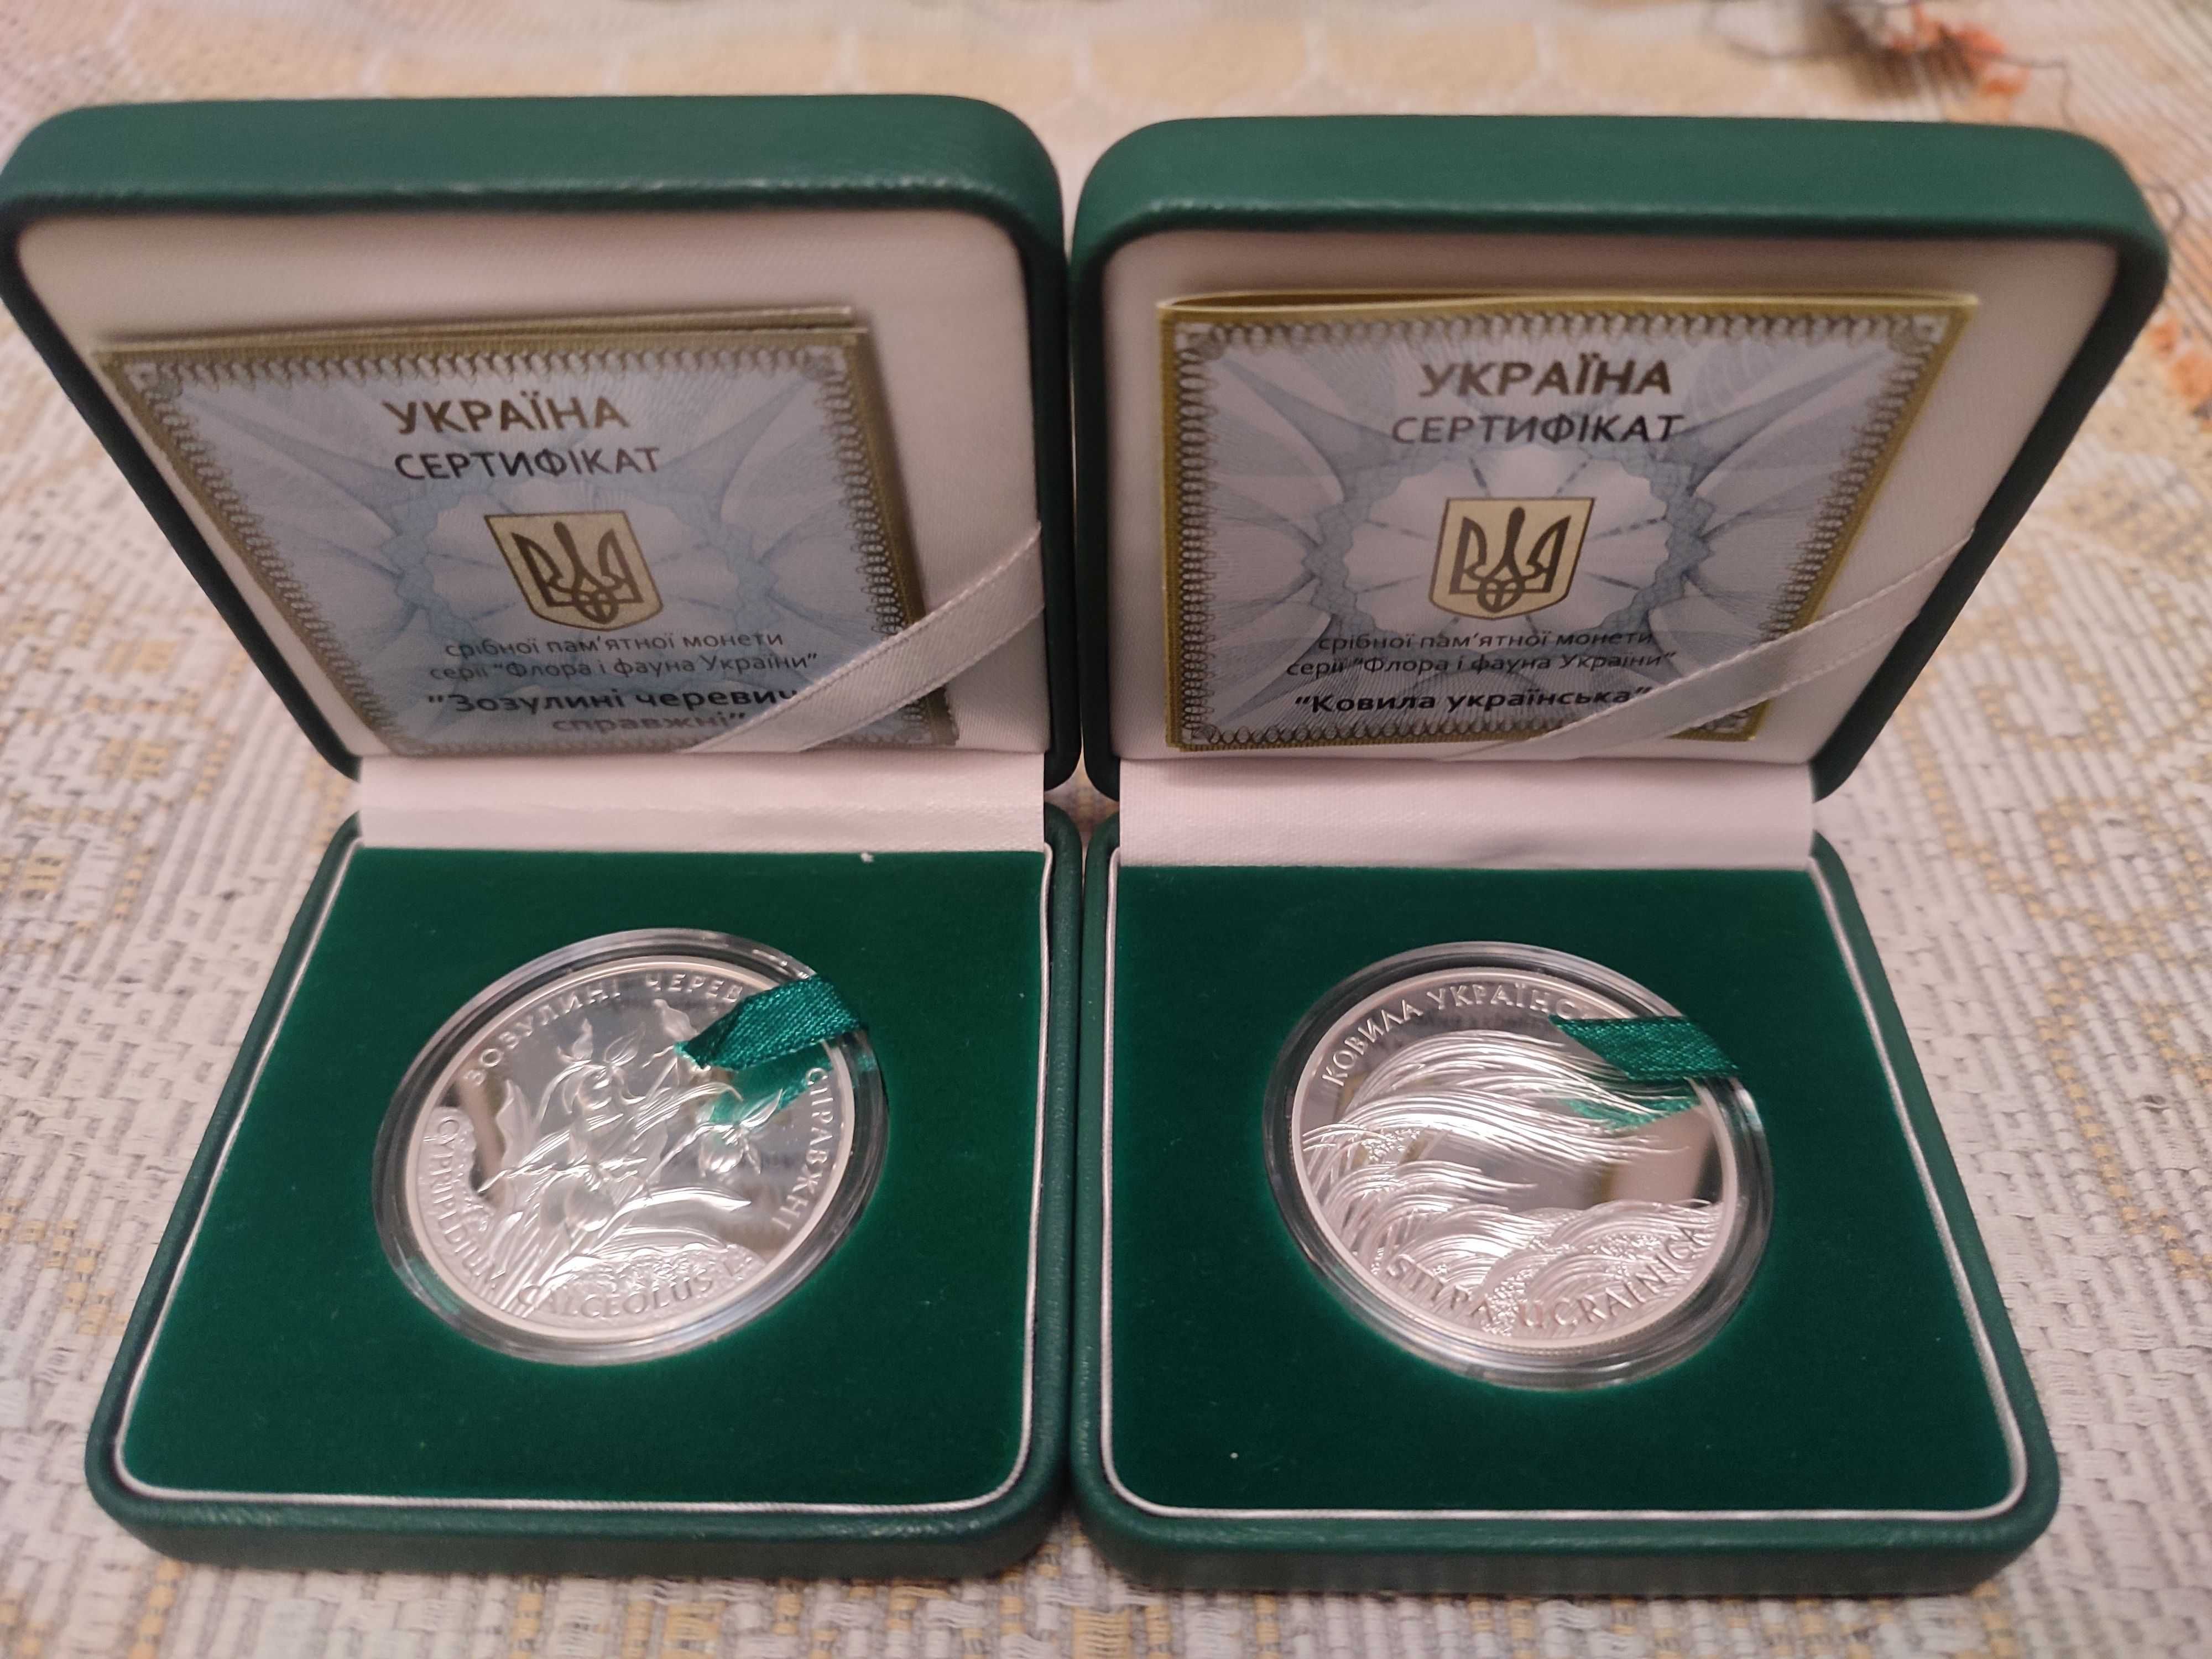 Монеты серии "Флора і фауна", серебро.